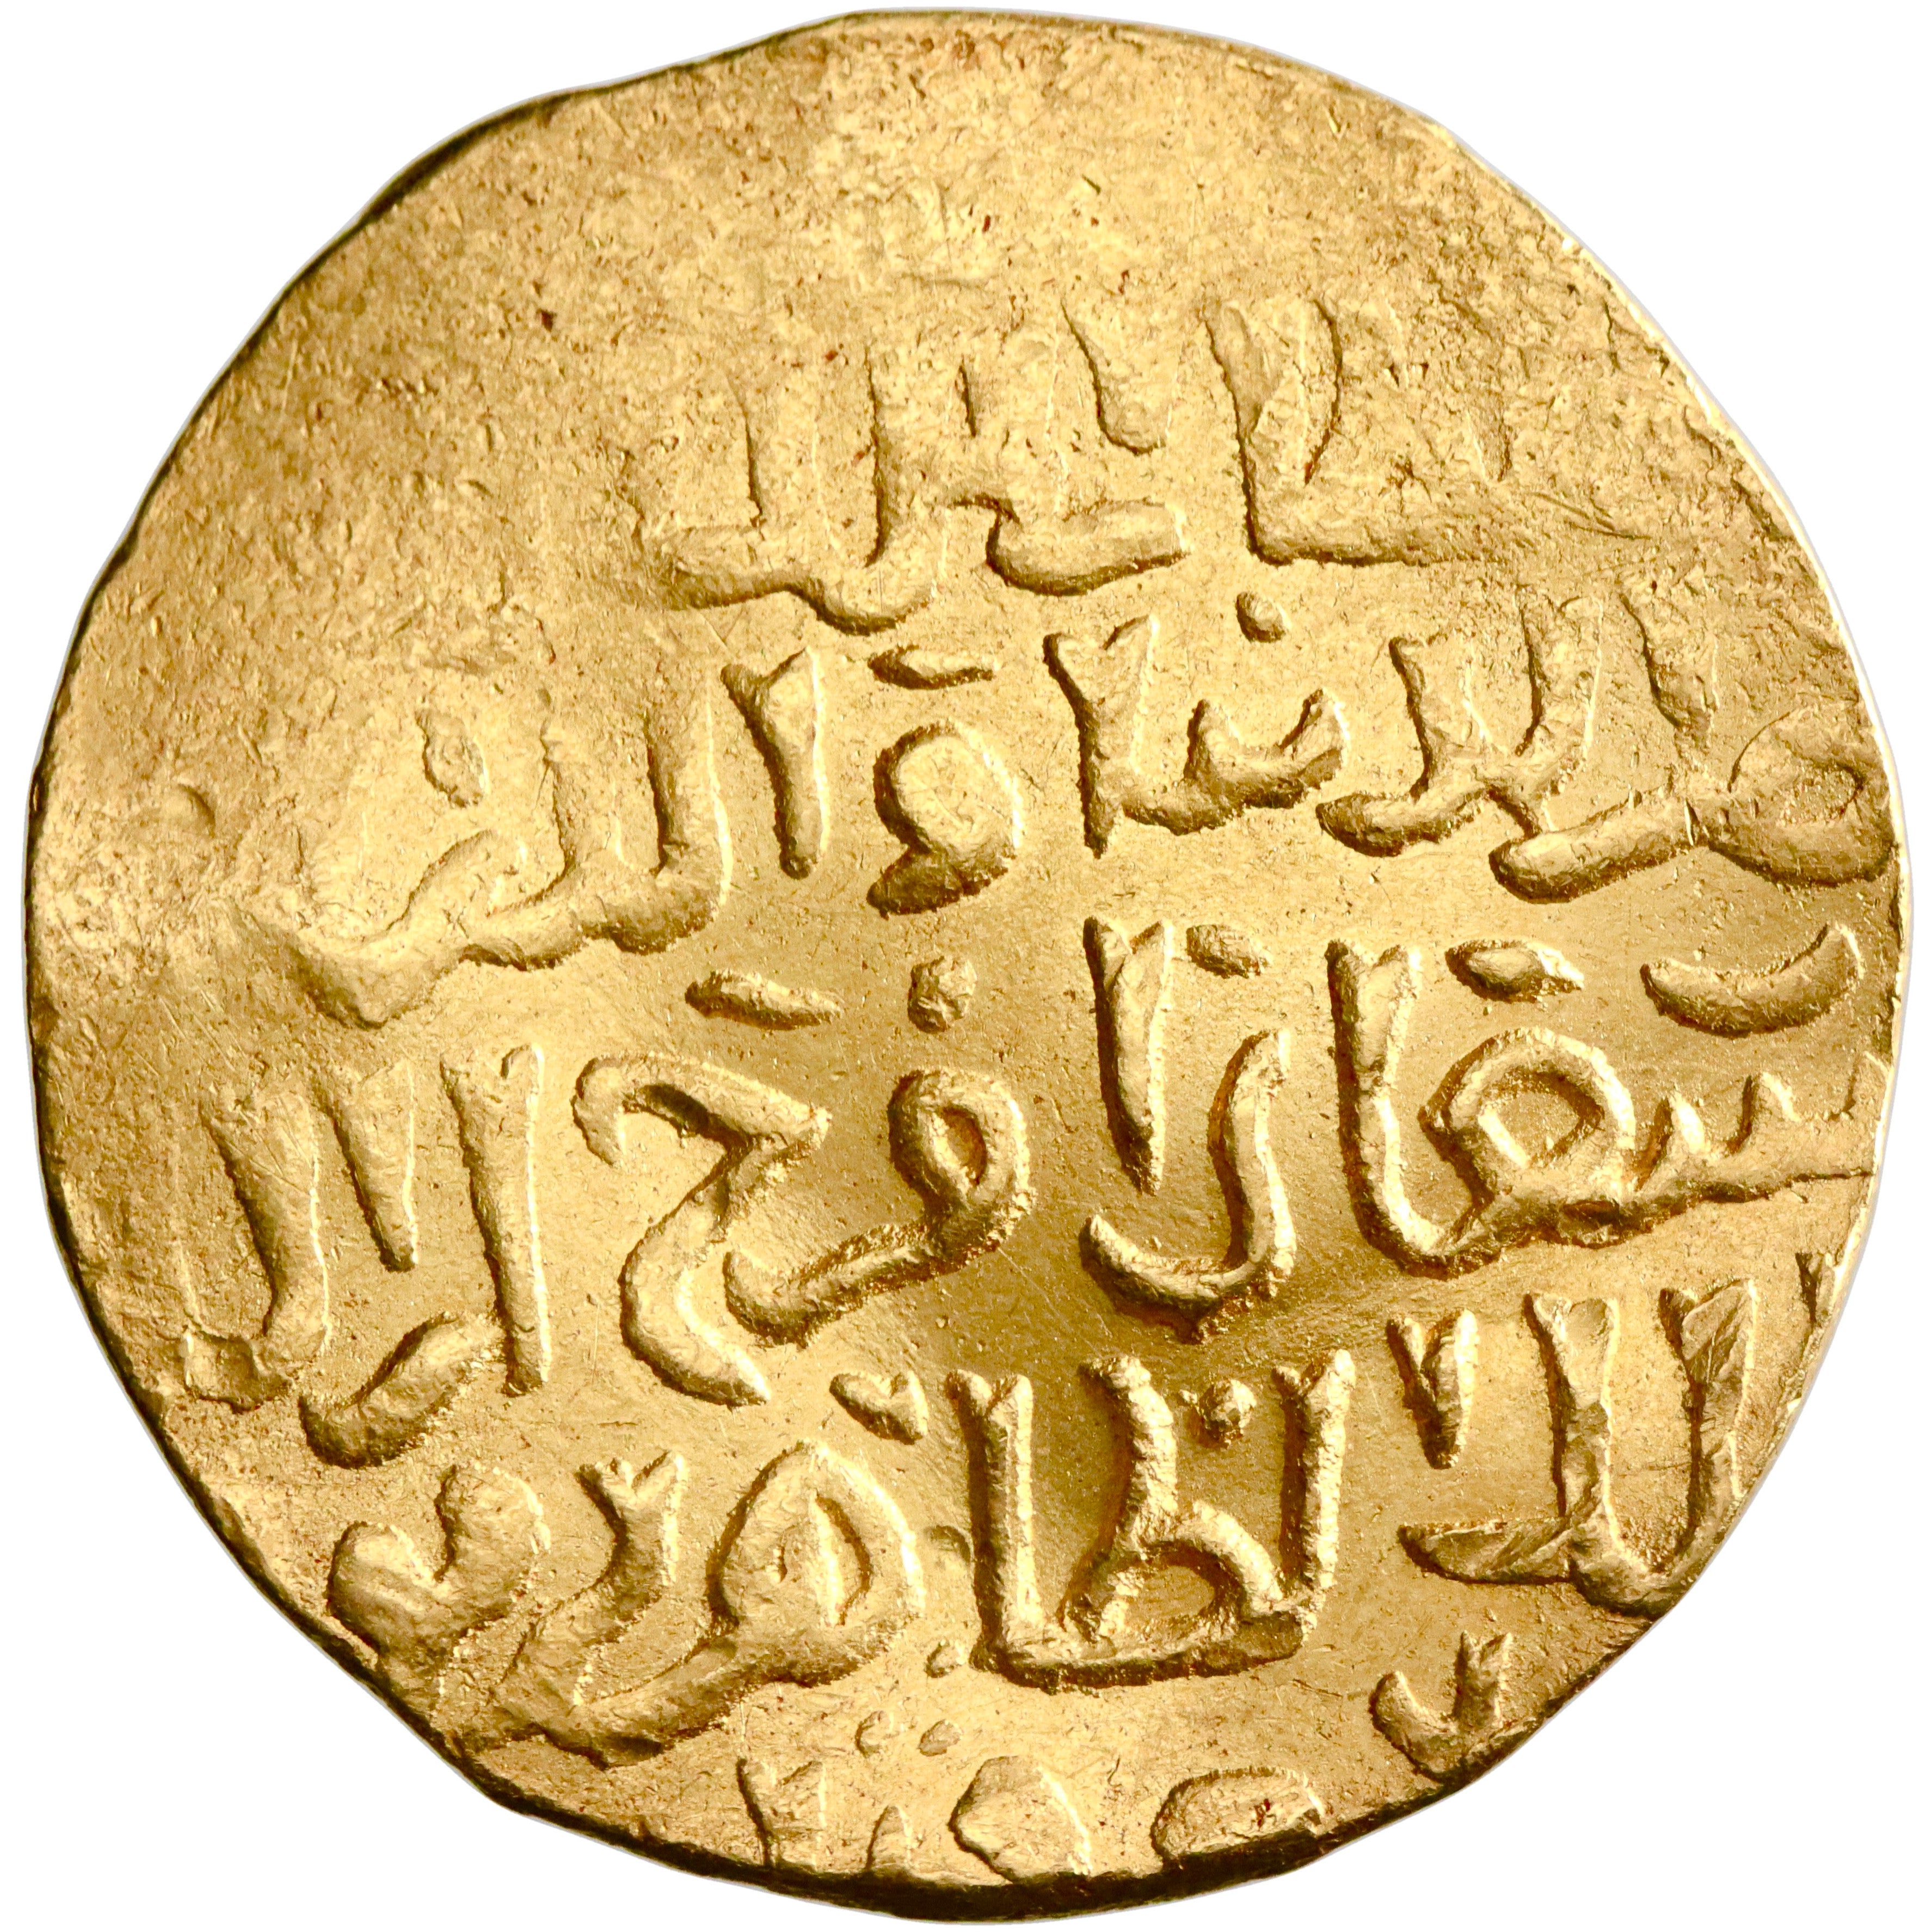 Burji Mamluk, al-Nasir Faraj, gold heavy dinar, al-Qahira (Cairo) mint, AH 801-815